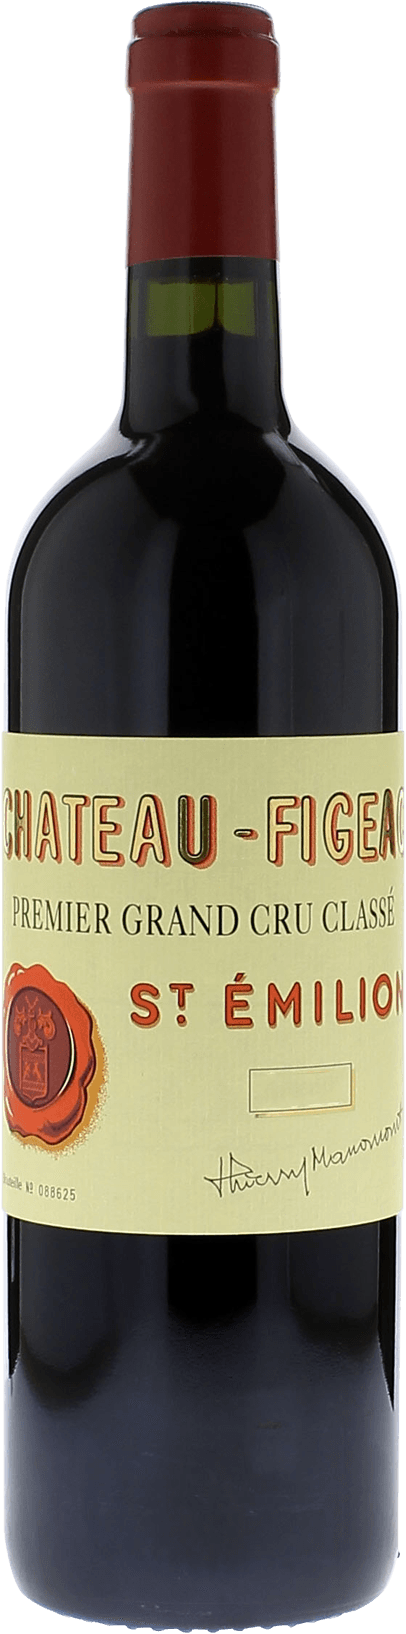 Figeac 1998 1er Grand cru B class Saint-Emilion, Bordeaux rouge